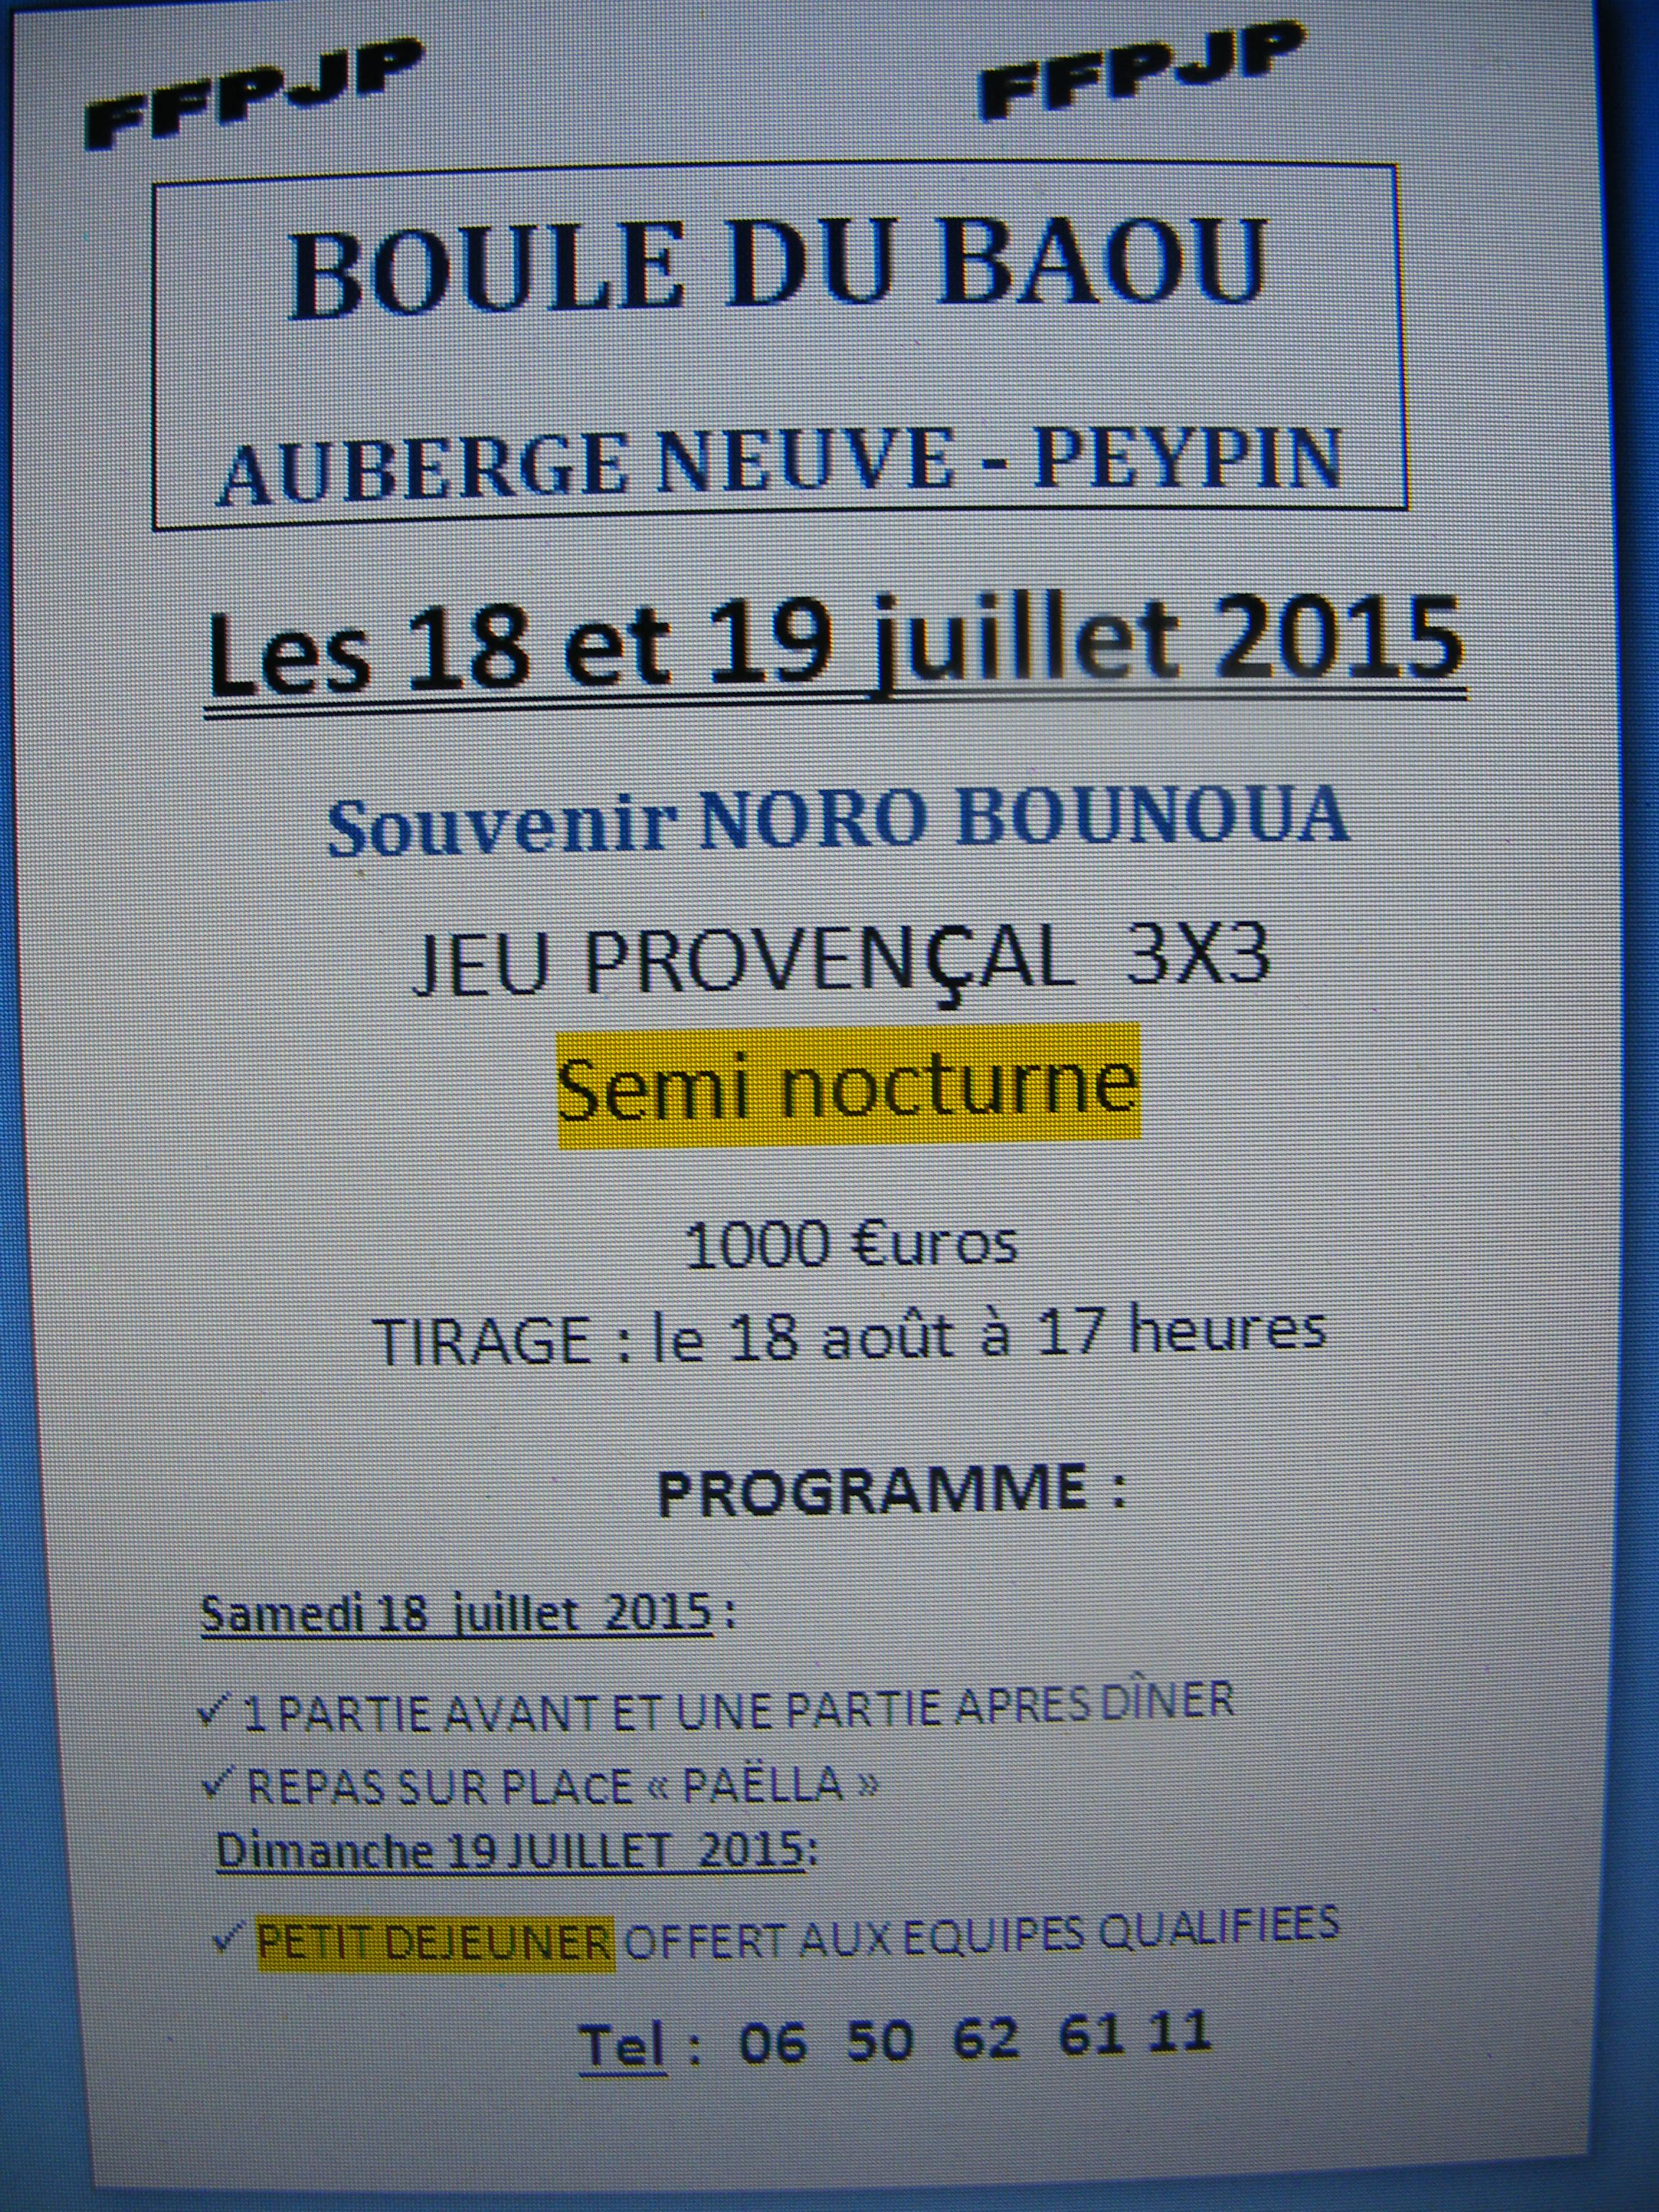 Souvenir Noro - Auberge Neuve Peypin - 18 et 19 juillet 2015 